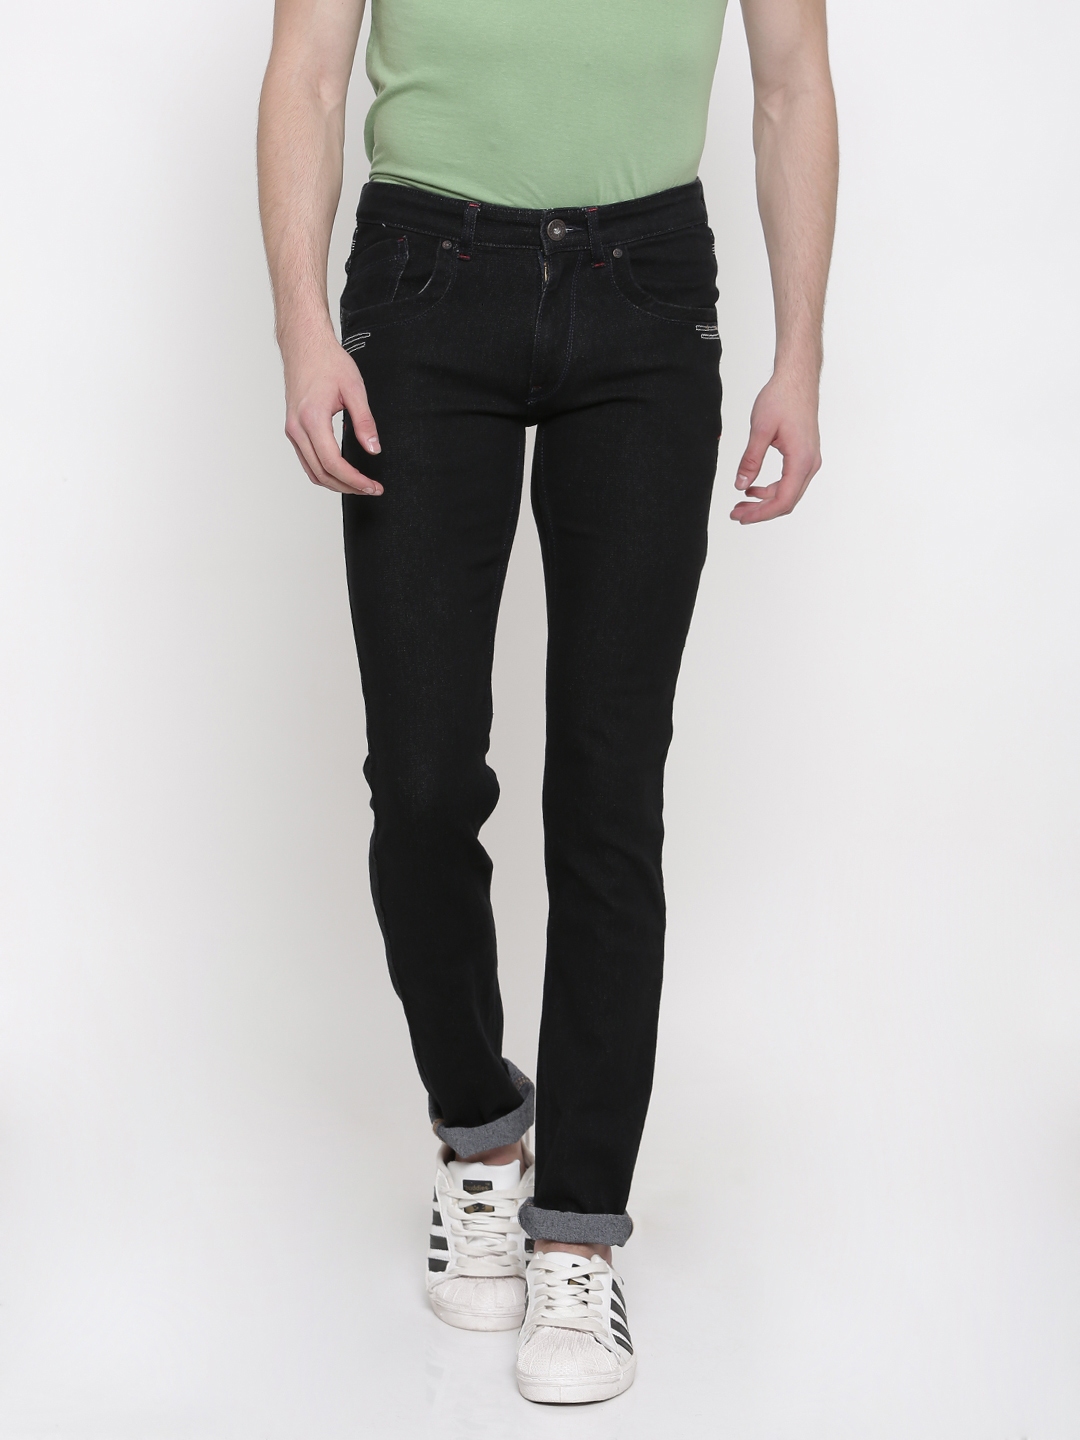 Buy Llak Jeans Men Black Skinny Fit Mid Rise Clean Look Stretchable ...